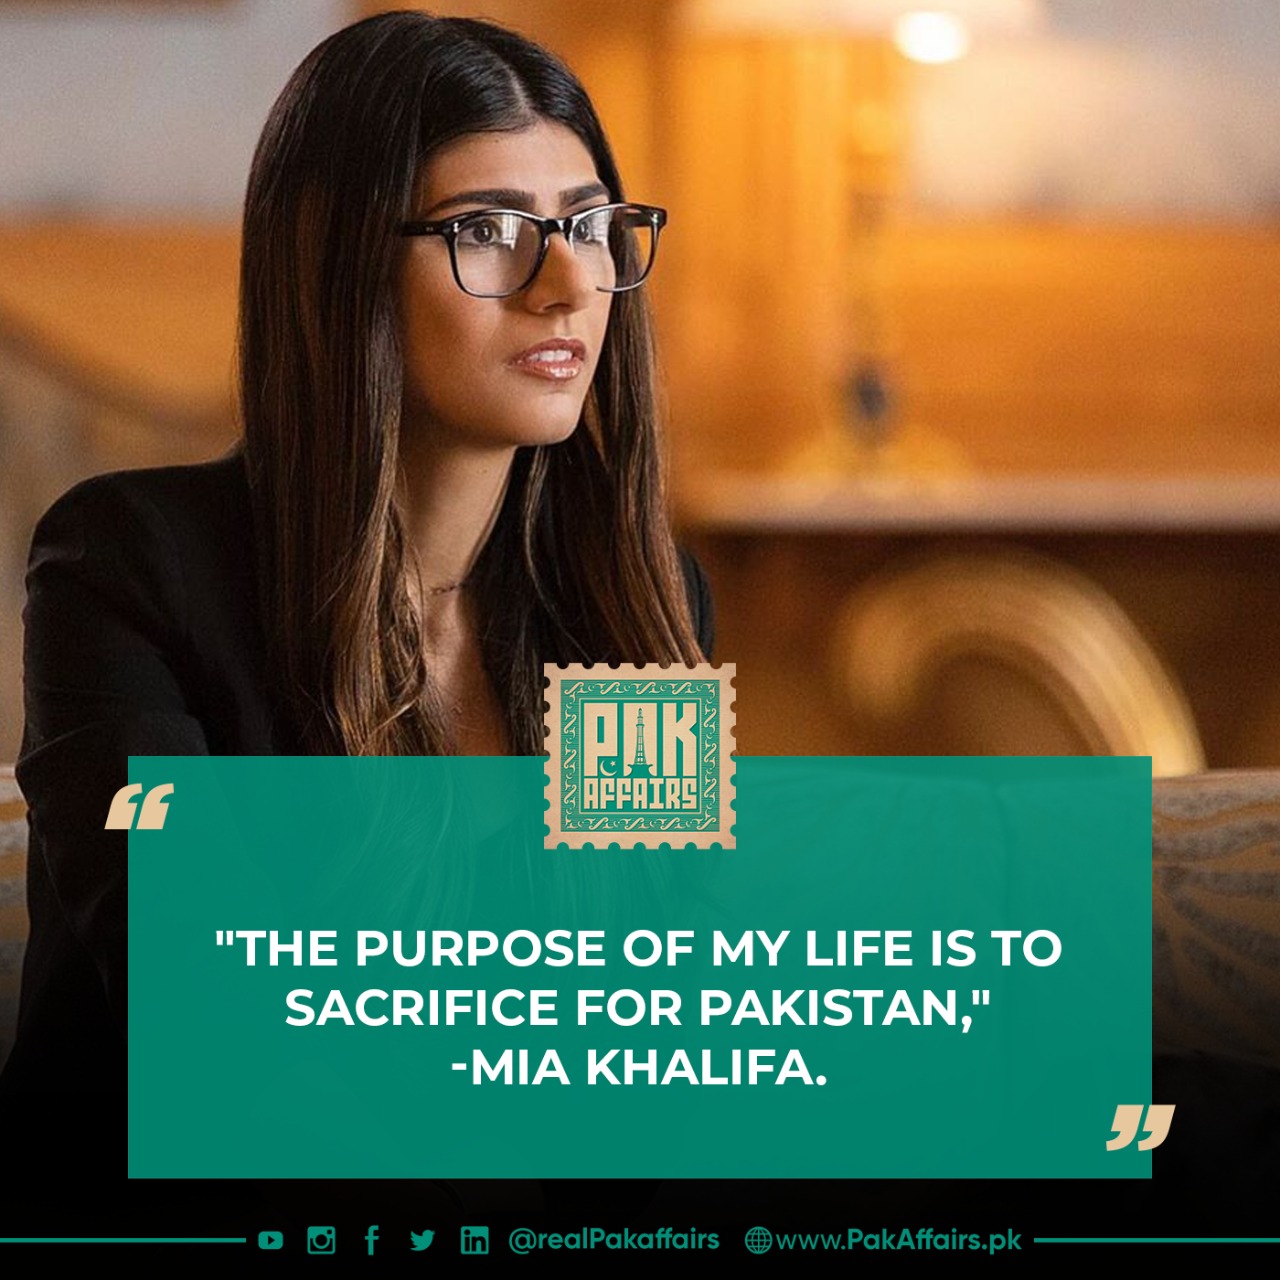 "The purpose of my life is to sacrifice for Pakistan," Mia Khalifa.